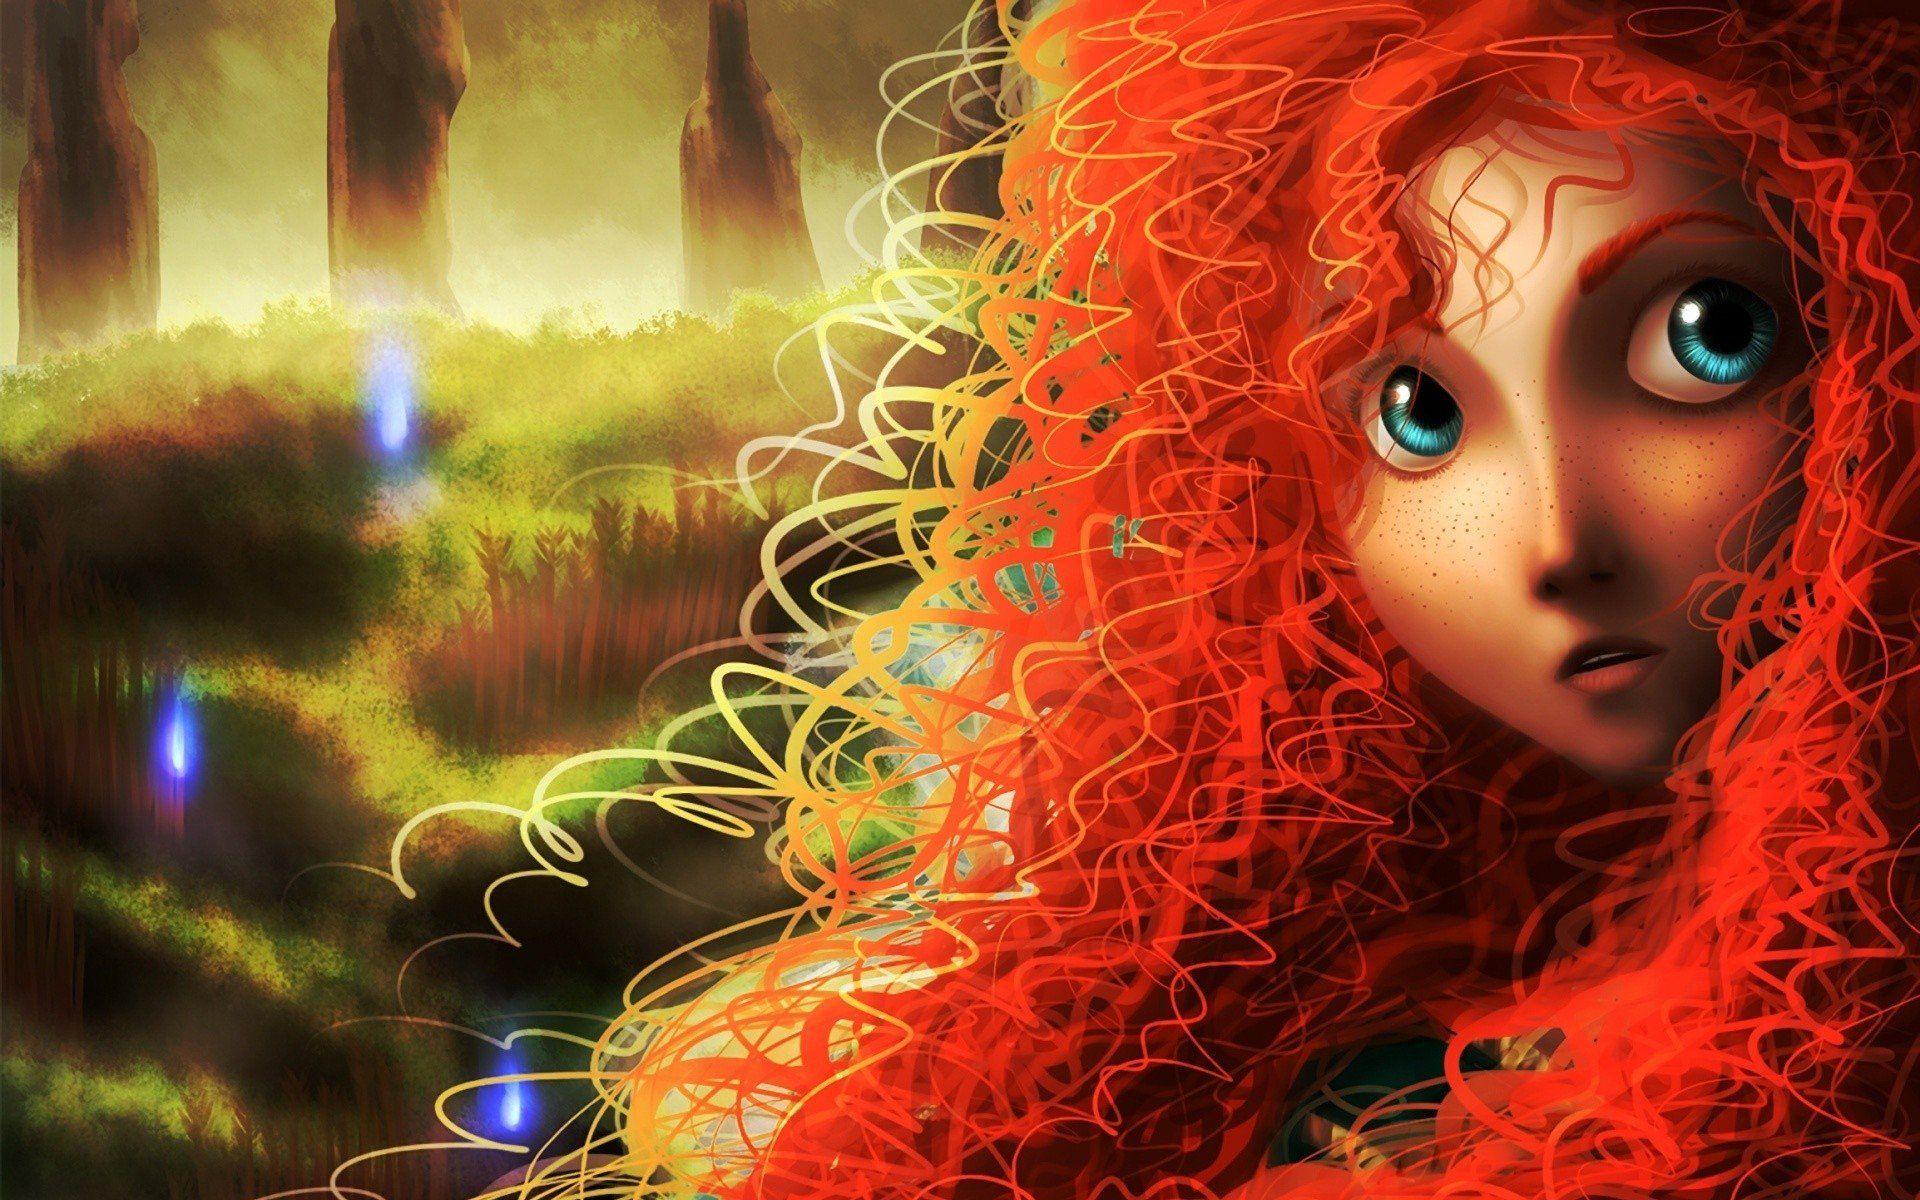 Women Pixar Disney Company movies redheads Brave wallpaper